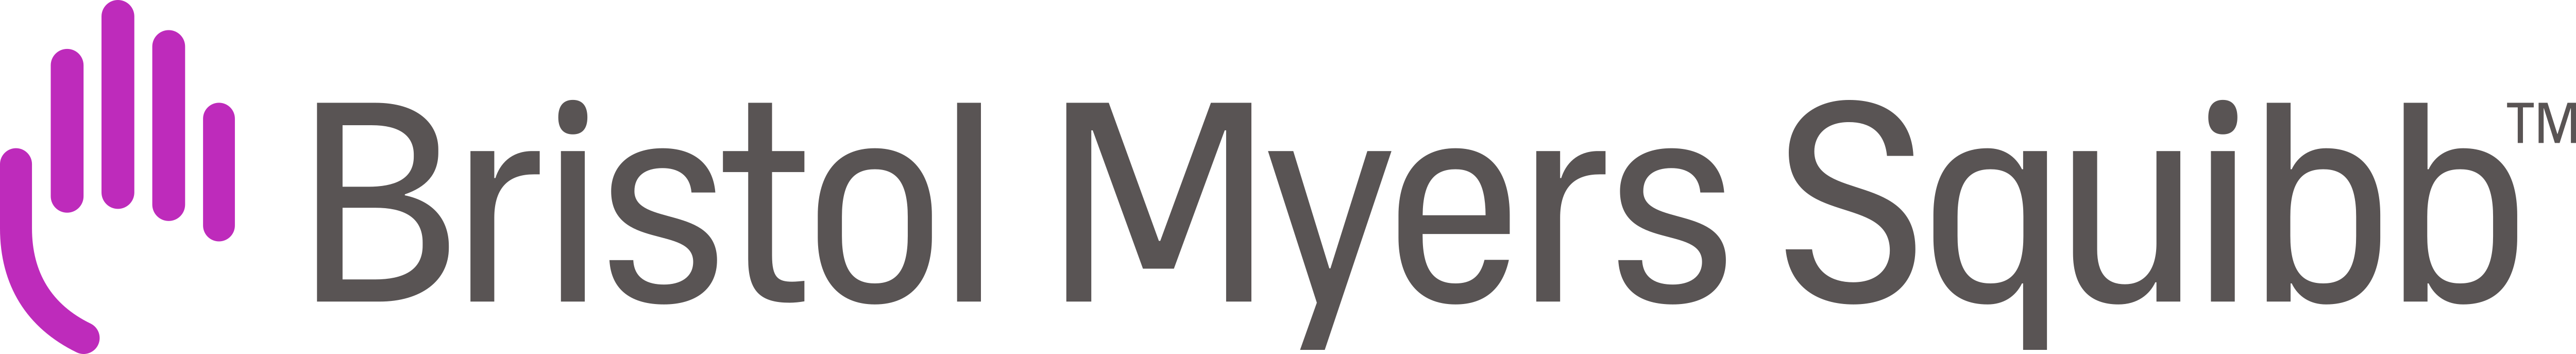 Bristol-Myers_Squibb_Logo_transparent